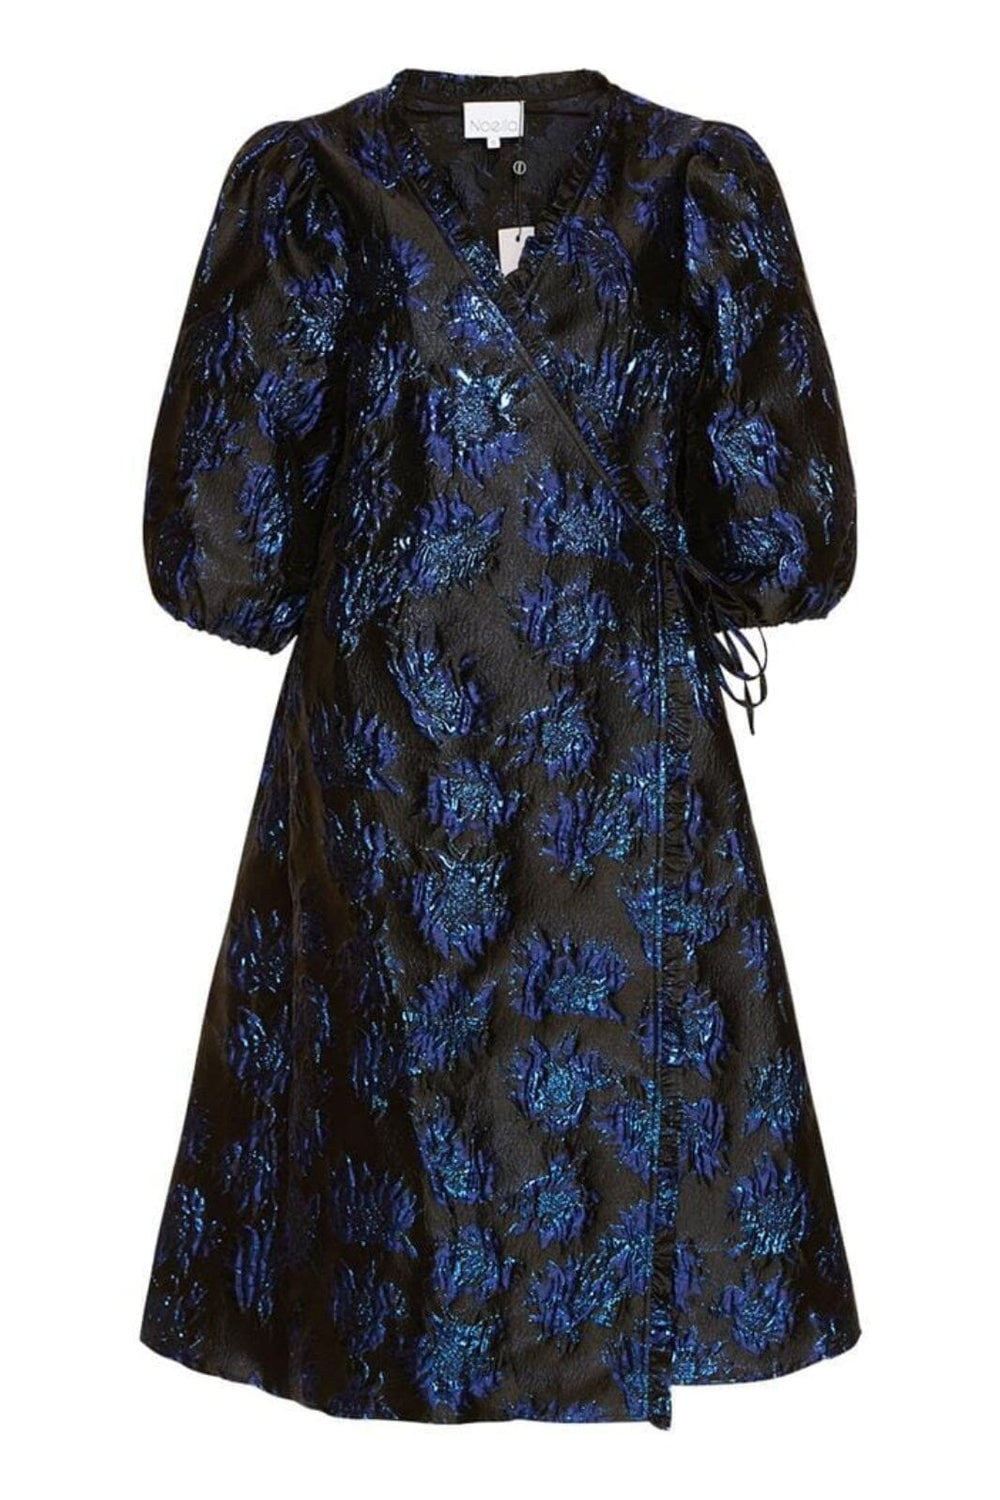 Noella - Jessa Wrap Dress - 101 Black/Royal Blue Kjoler 